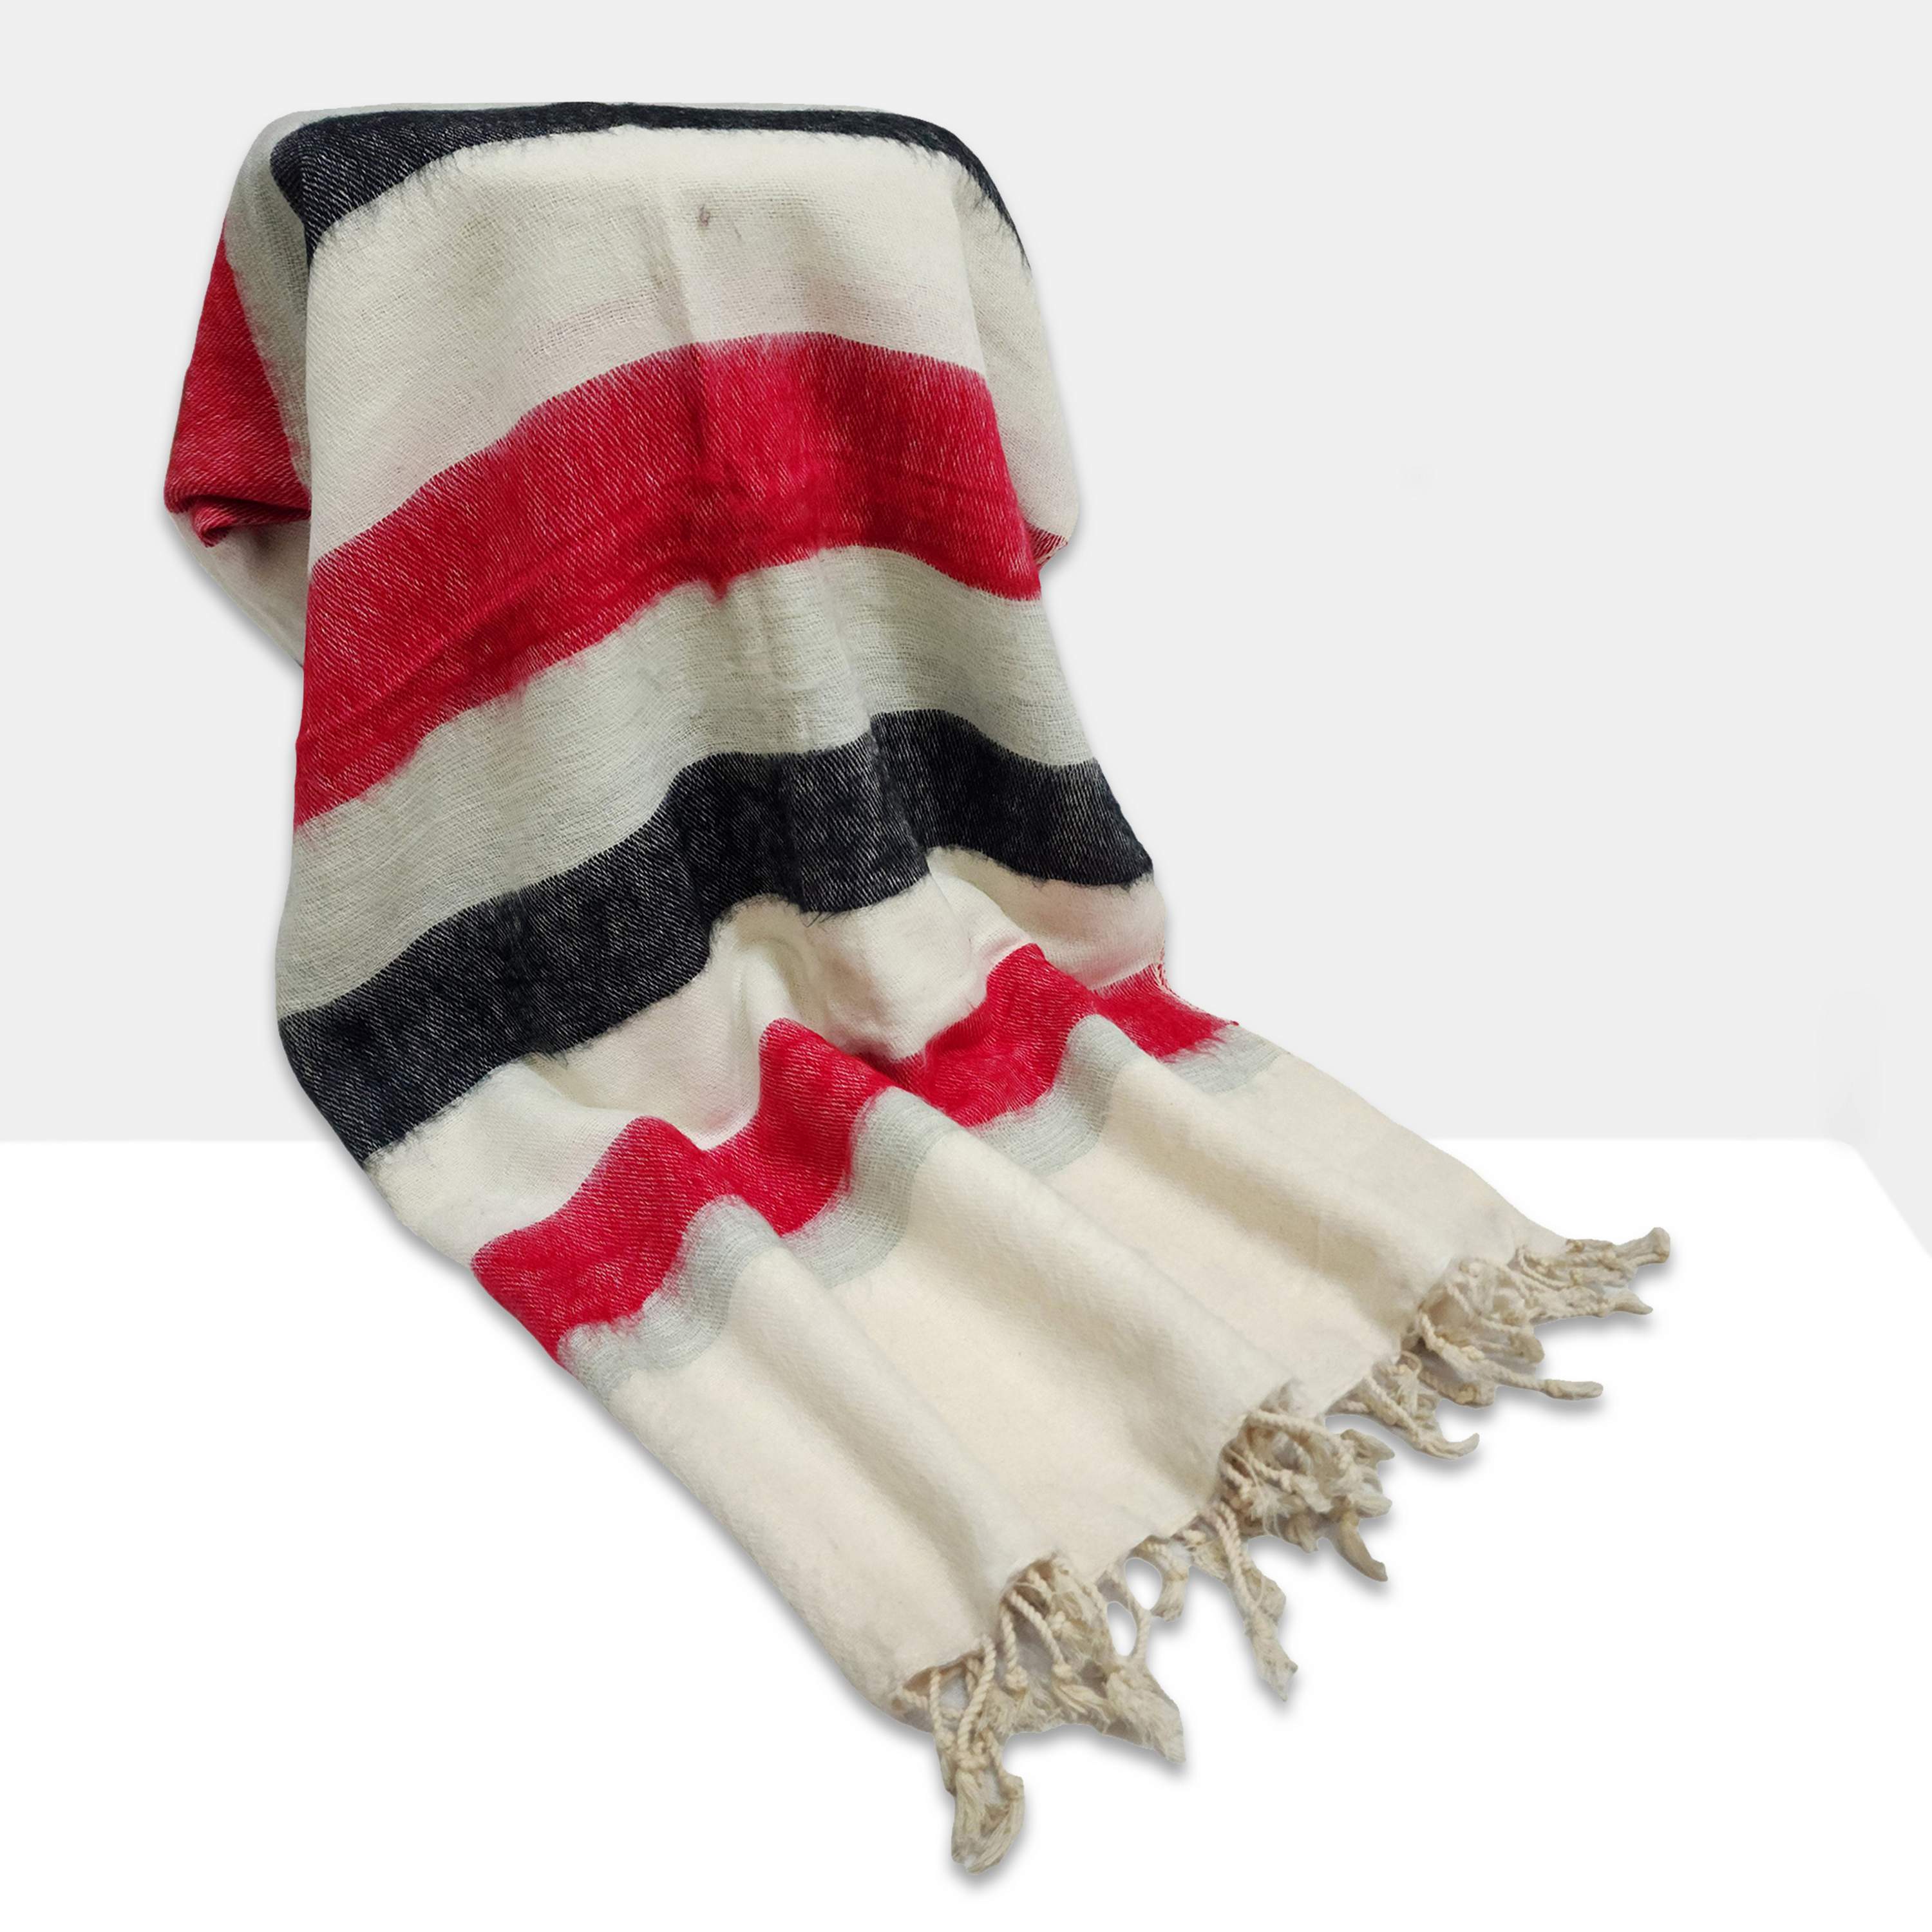 Yak Wool Blanket, Nepali Acrylic Hand Loom Blanket, <span Style=